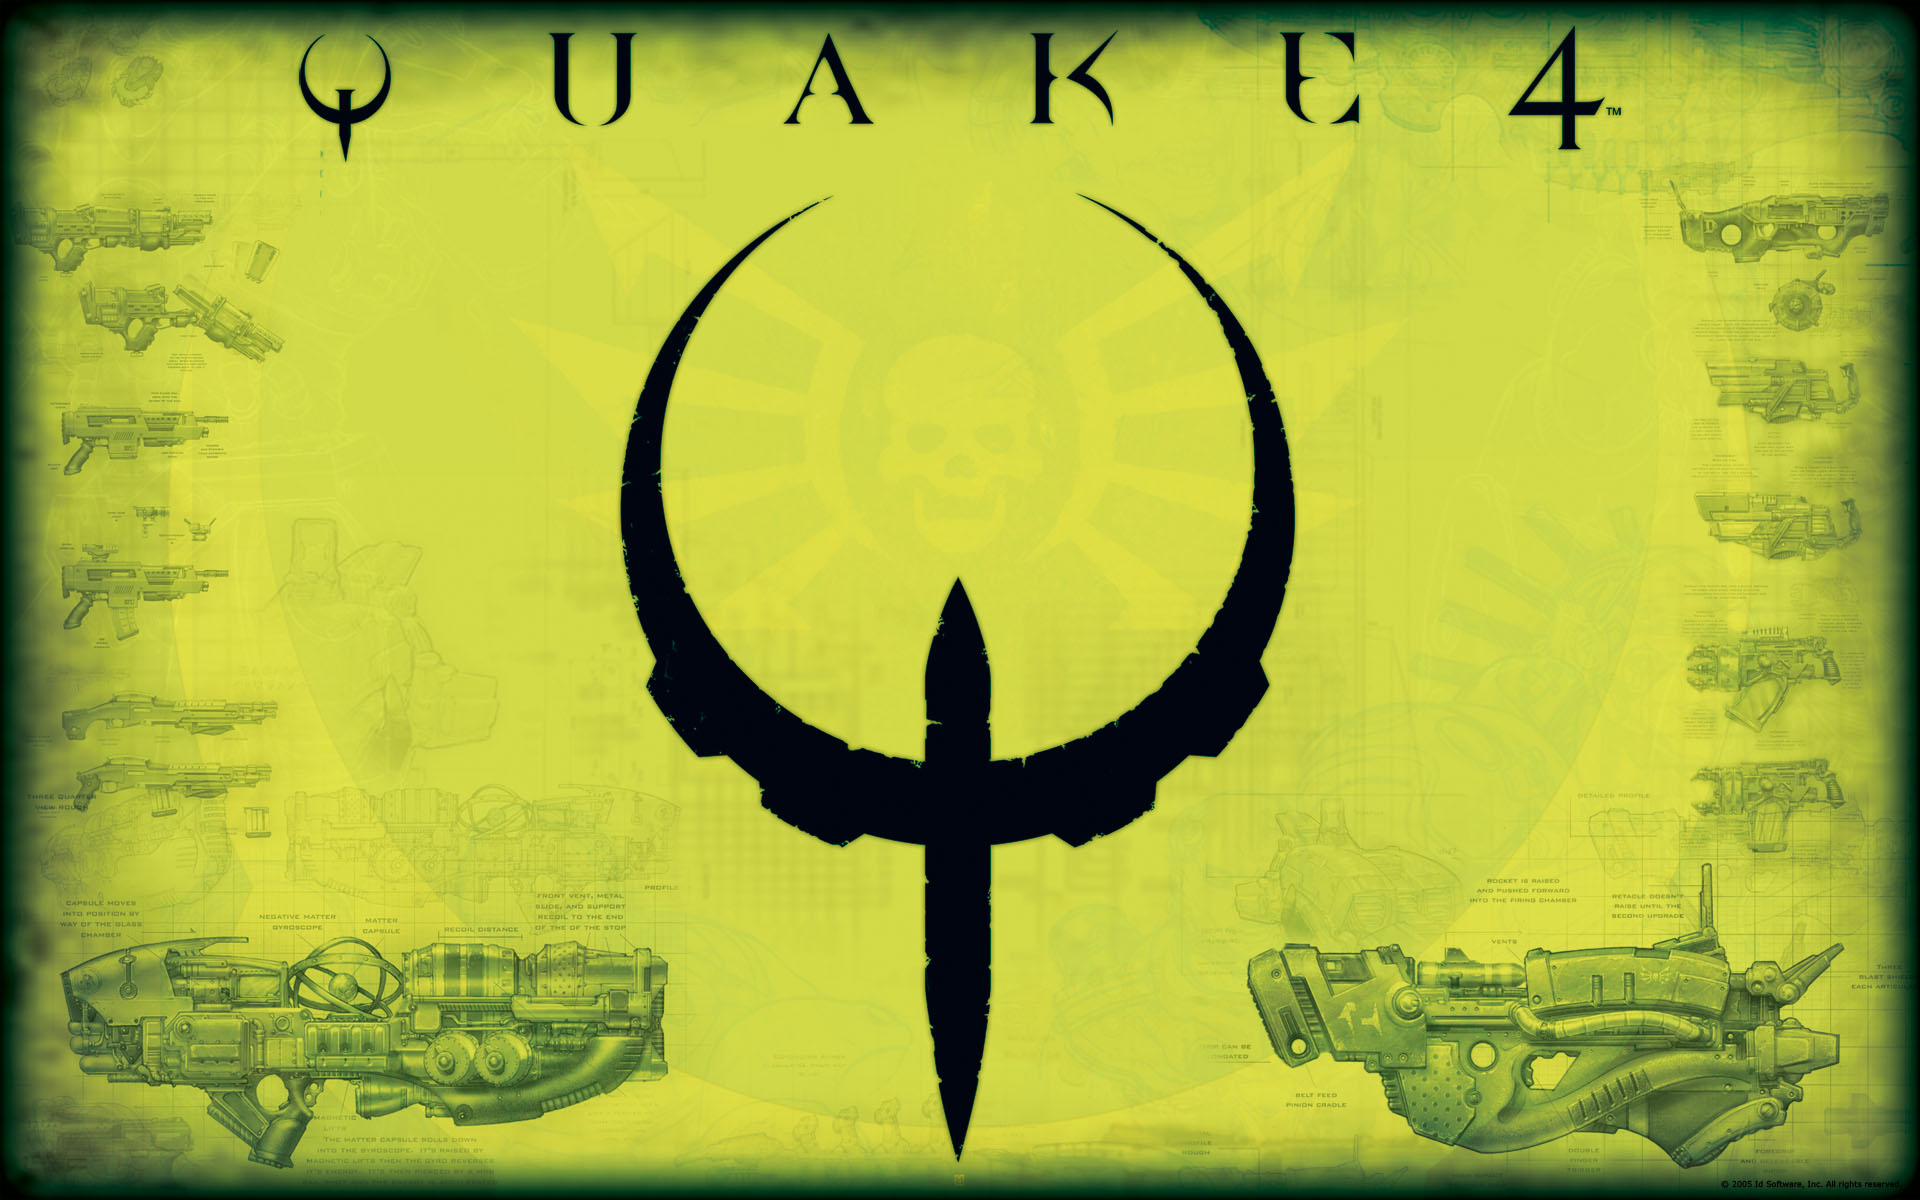 Download full size Quake 4 wallpaper / Games / 1920x1200